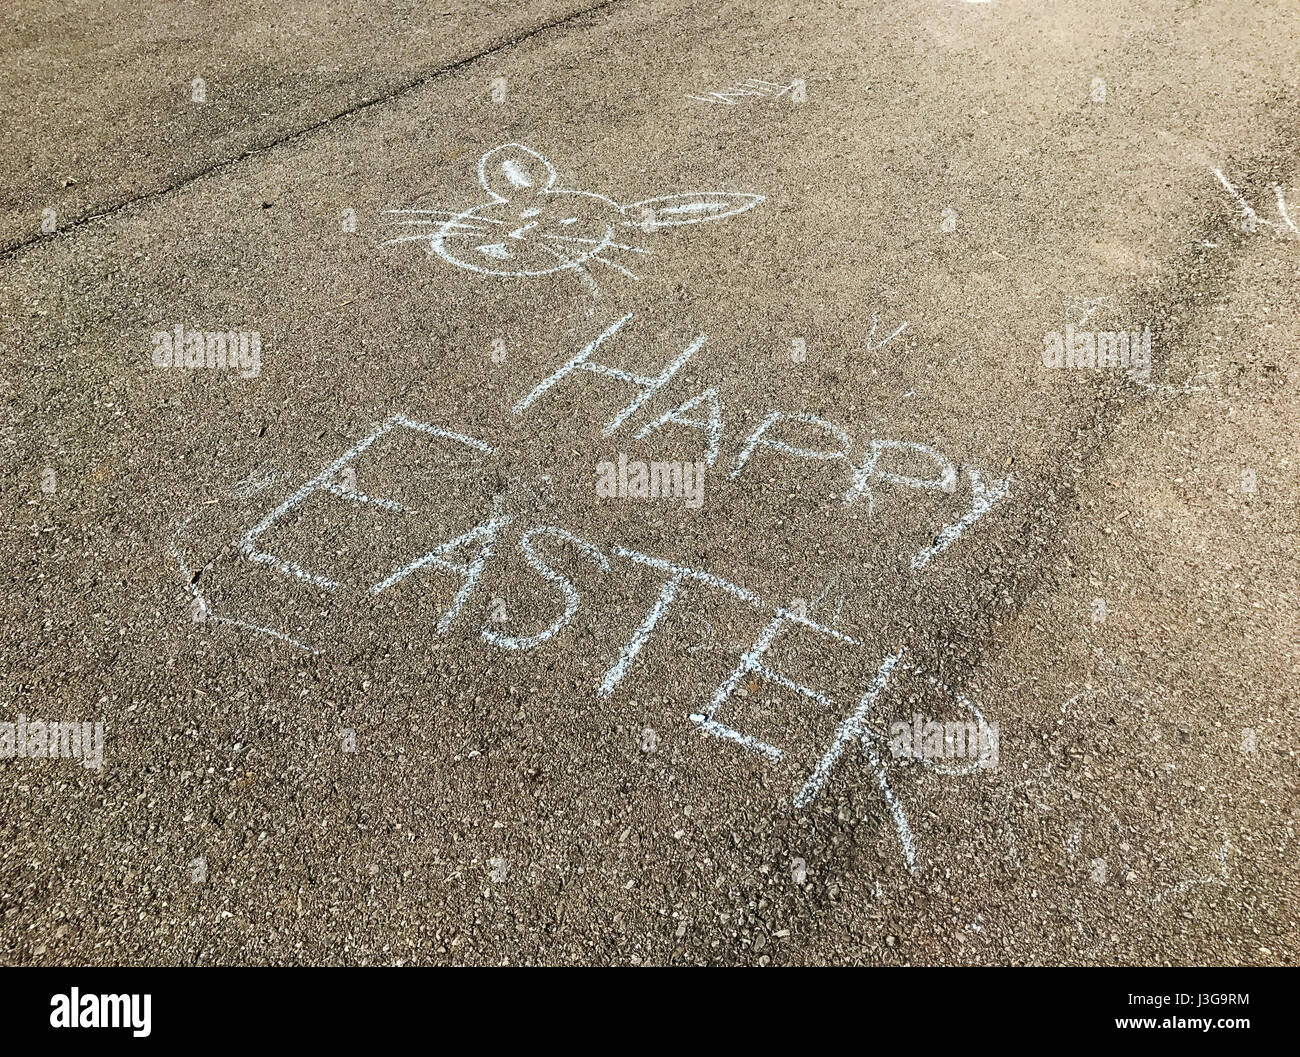 Easter graffiti on sidewalk. Stock Photo